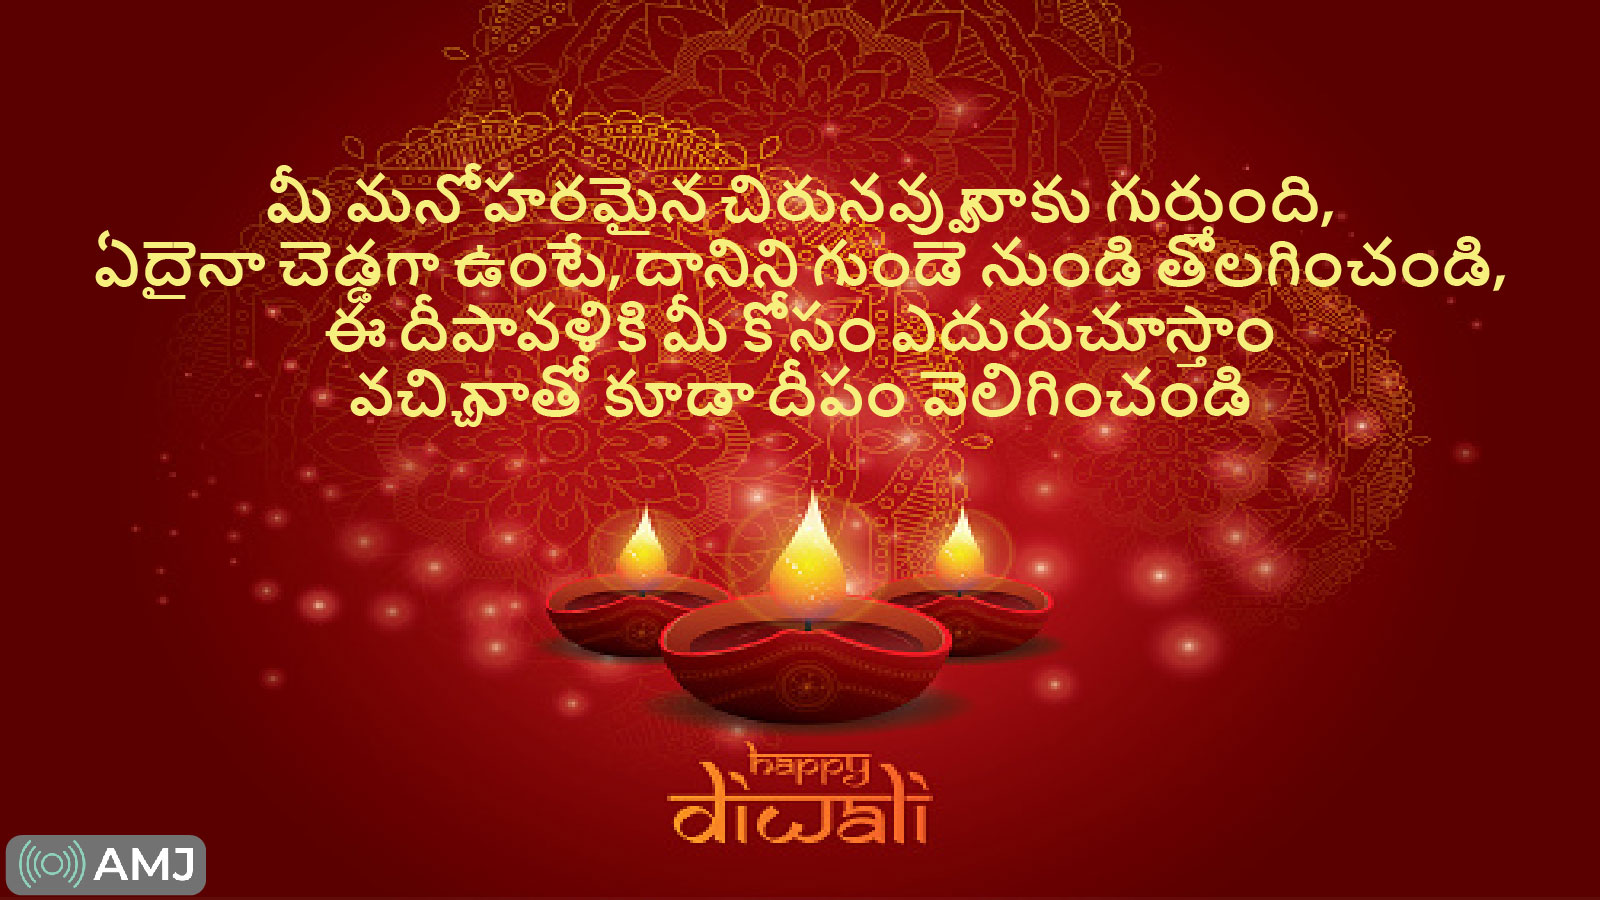 Diwali Wishes in Telugu font